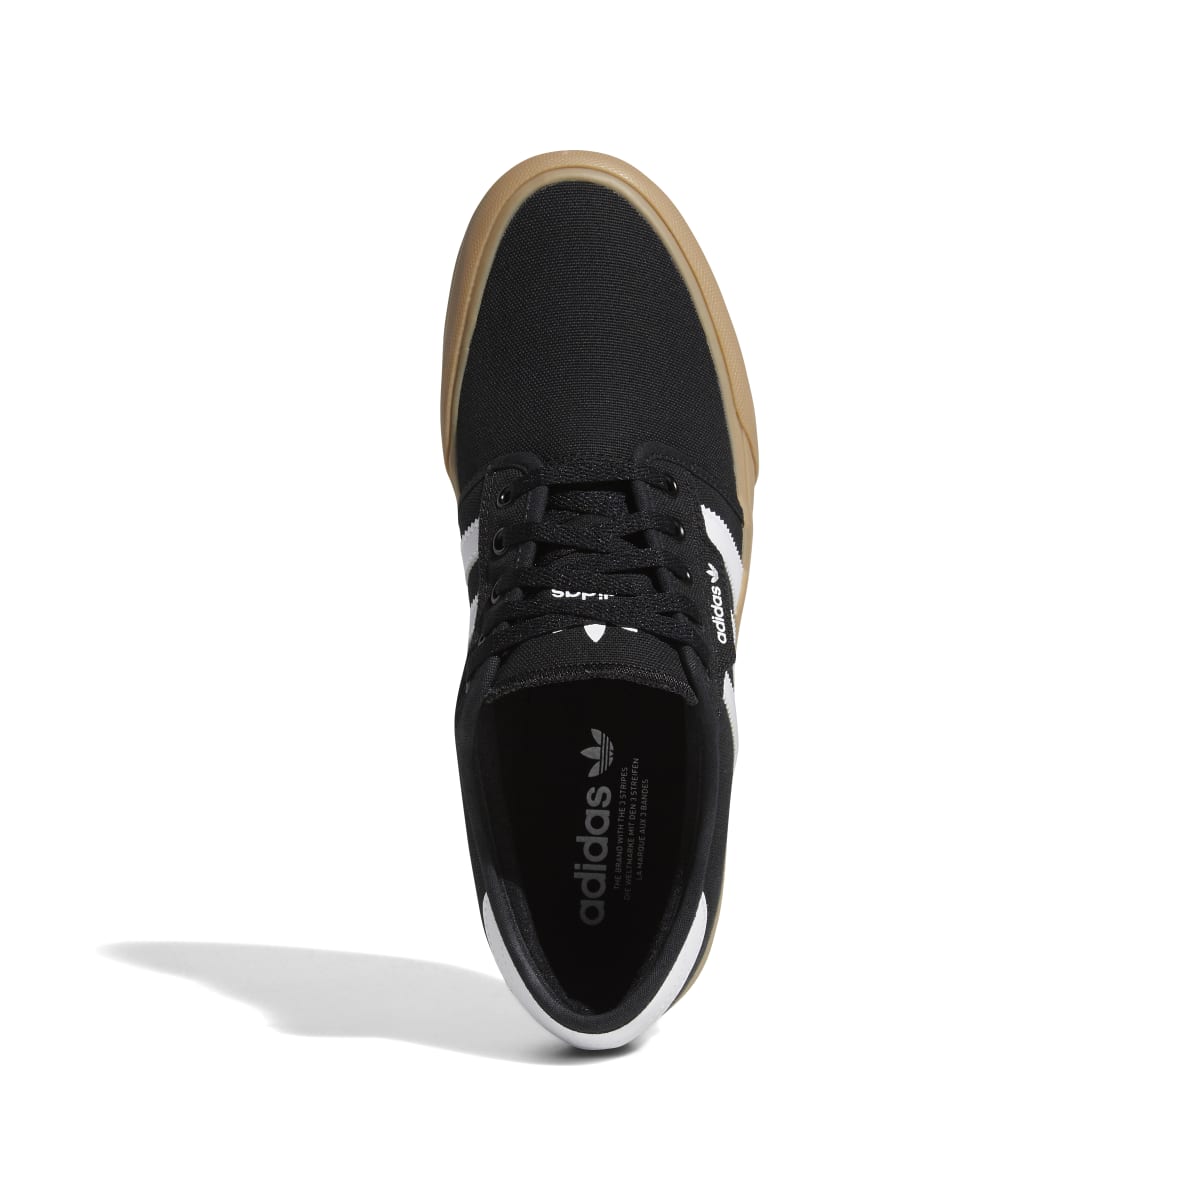 ADIDAS GZ8567 SEELEY XT MN'S (Medium) Black/White/Gum Textile Skate Shoes